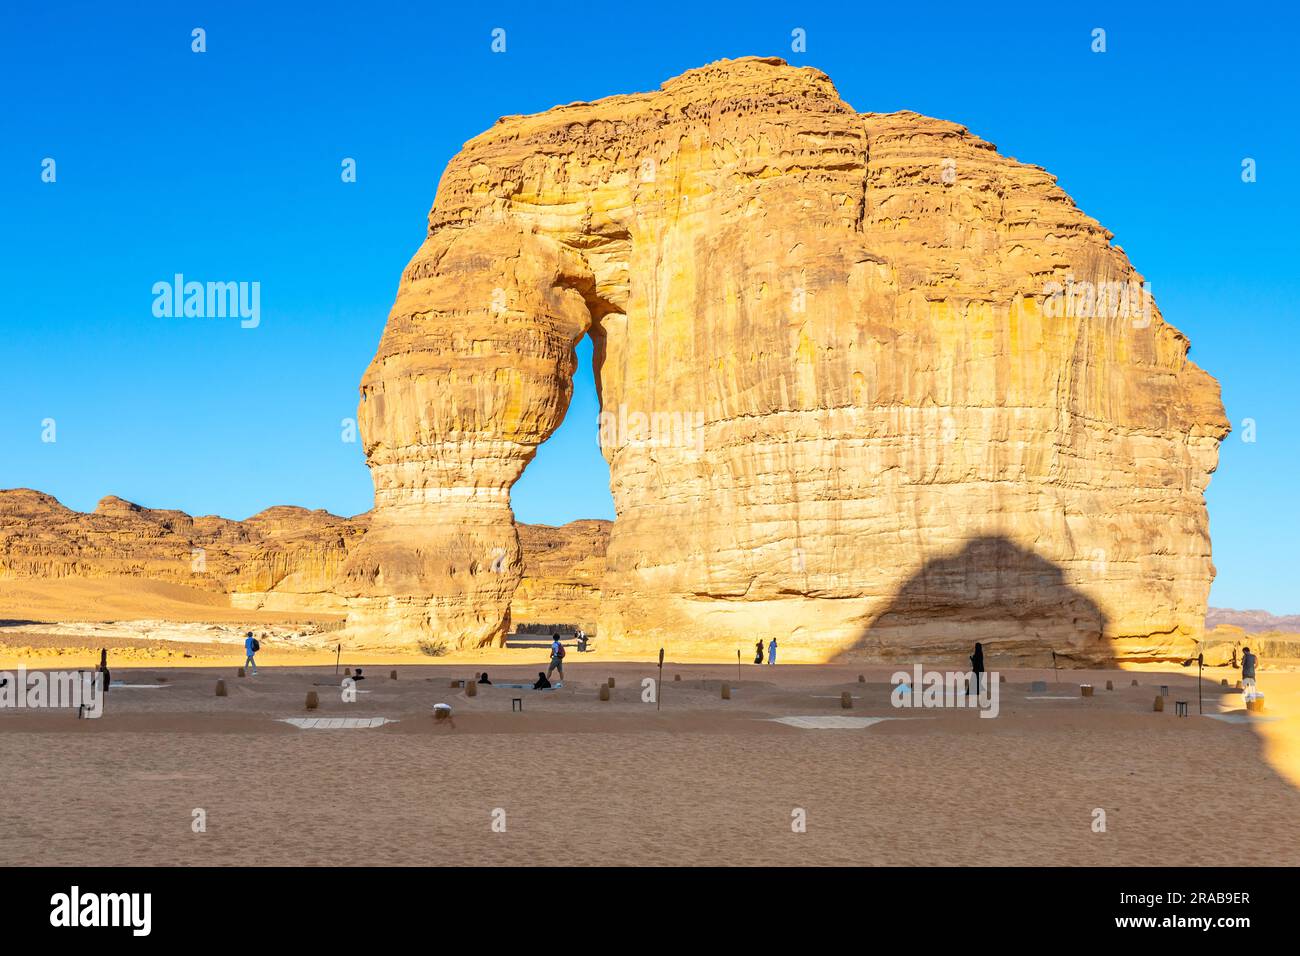 Sandstone elephant rock erosion monolith standing in the desert, Al Ula, Saudi Arabia Stock Photo